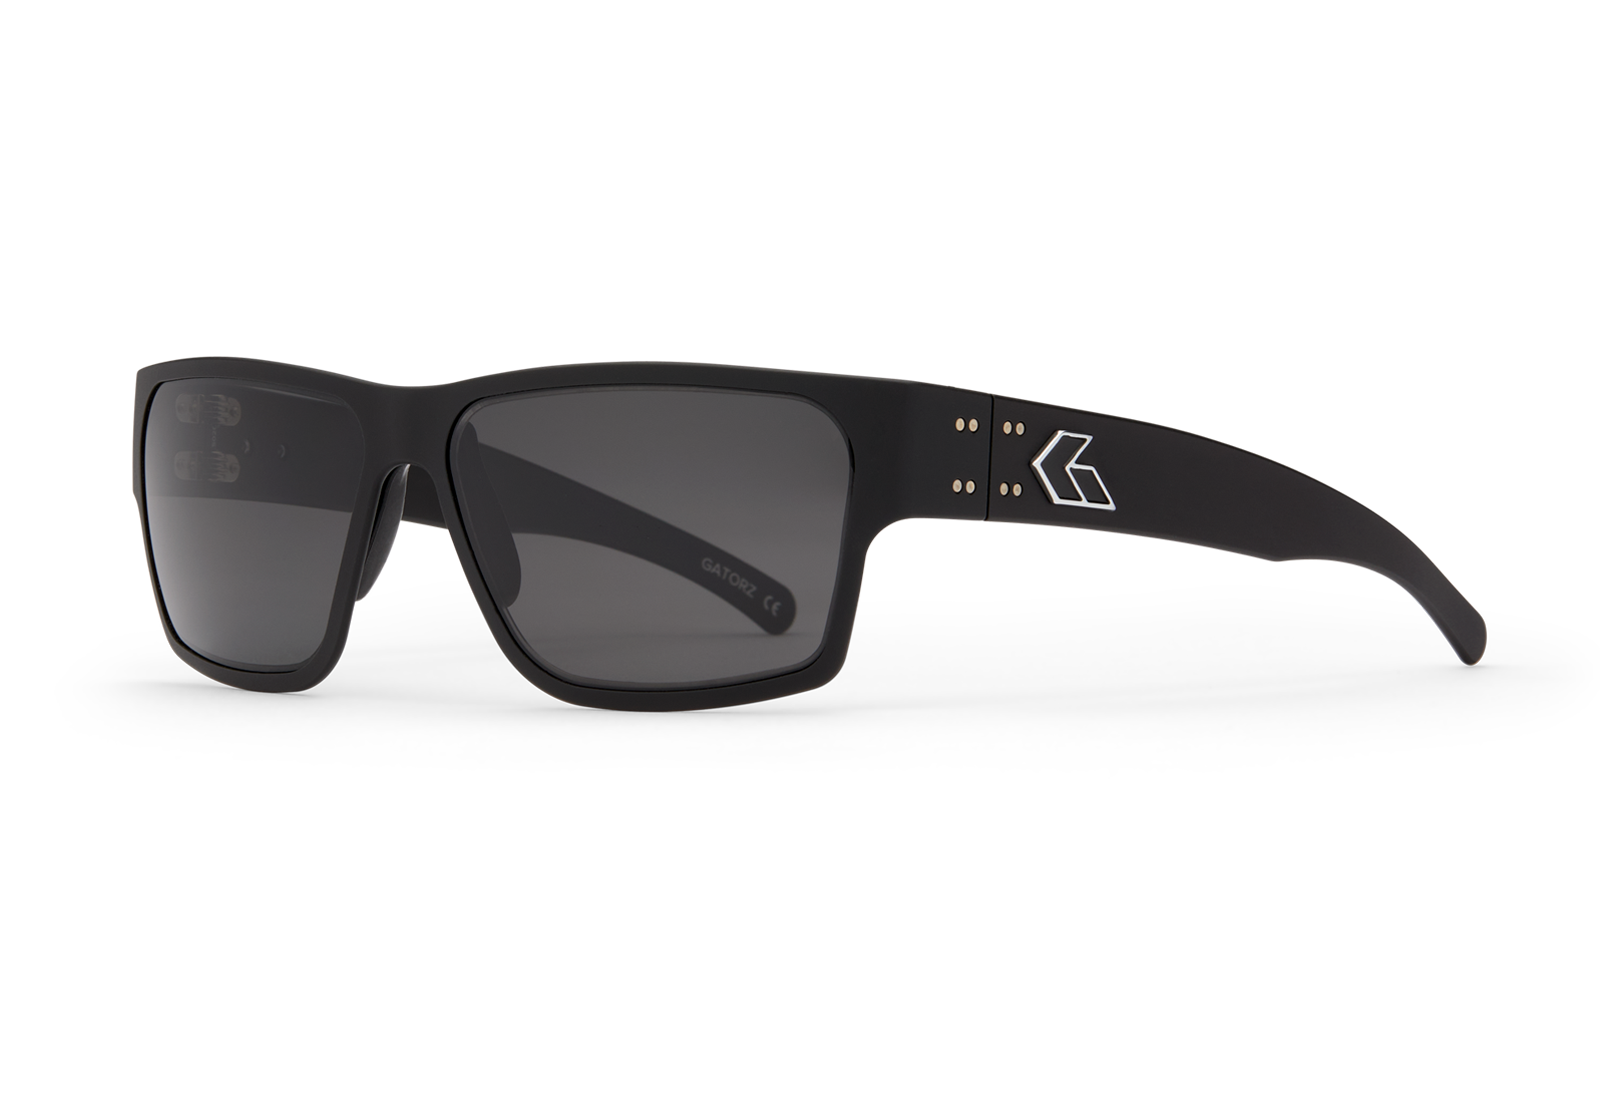 Gatorz Delta Matte Black Smoked Polarized Sunglasses